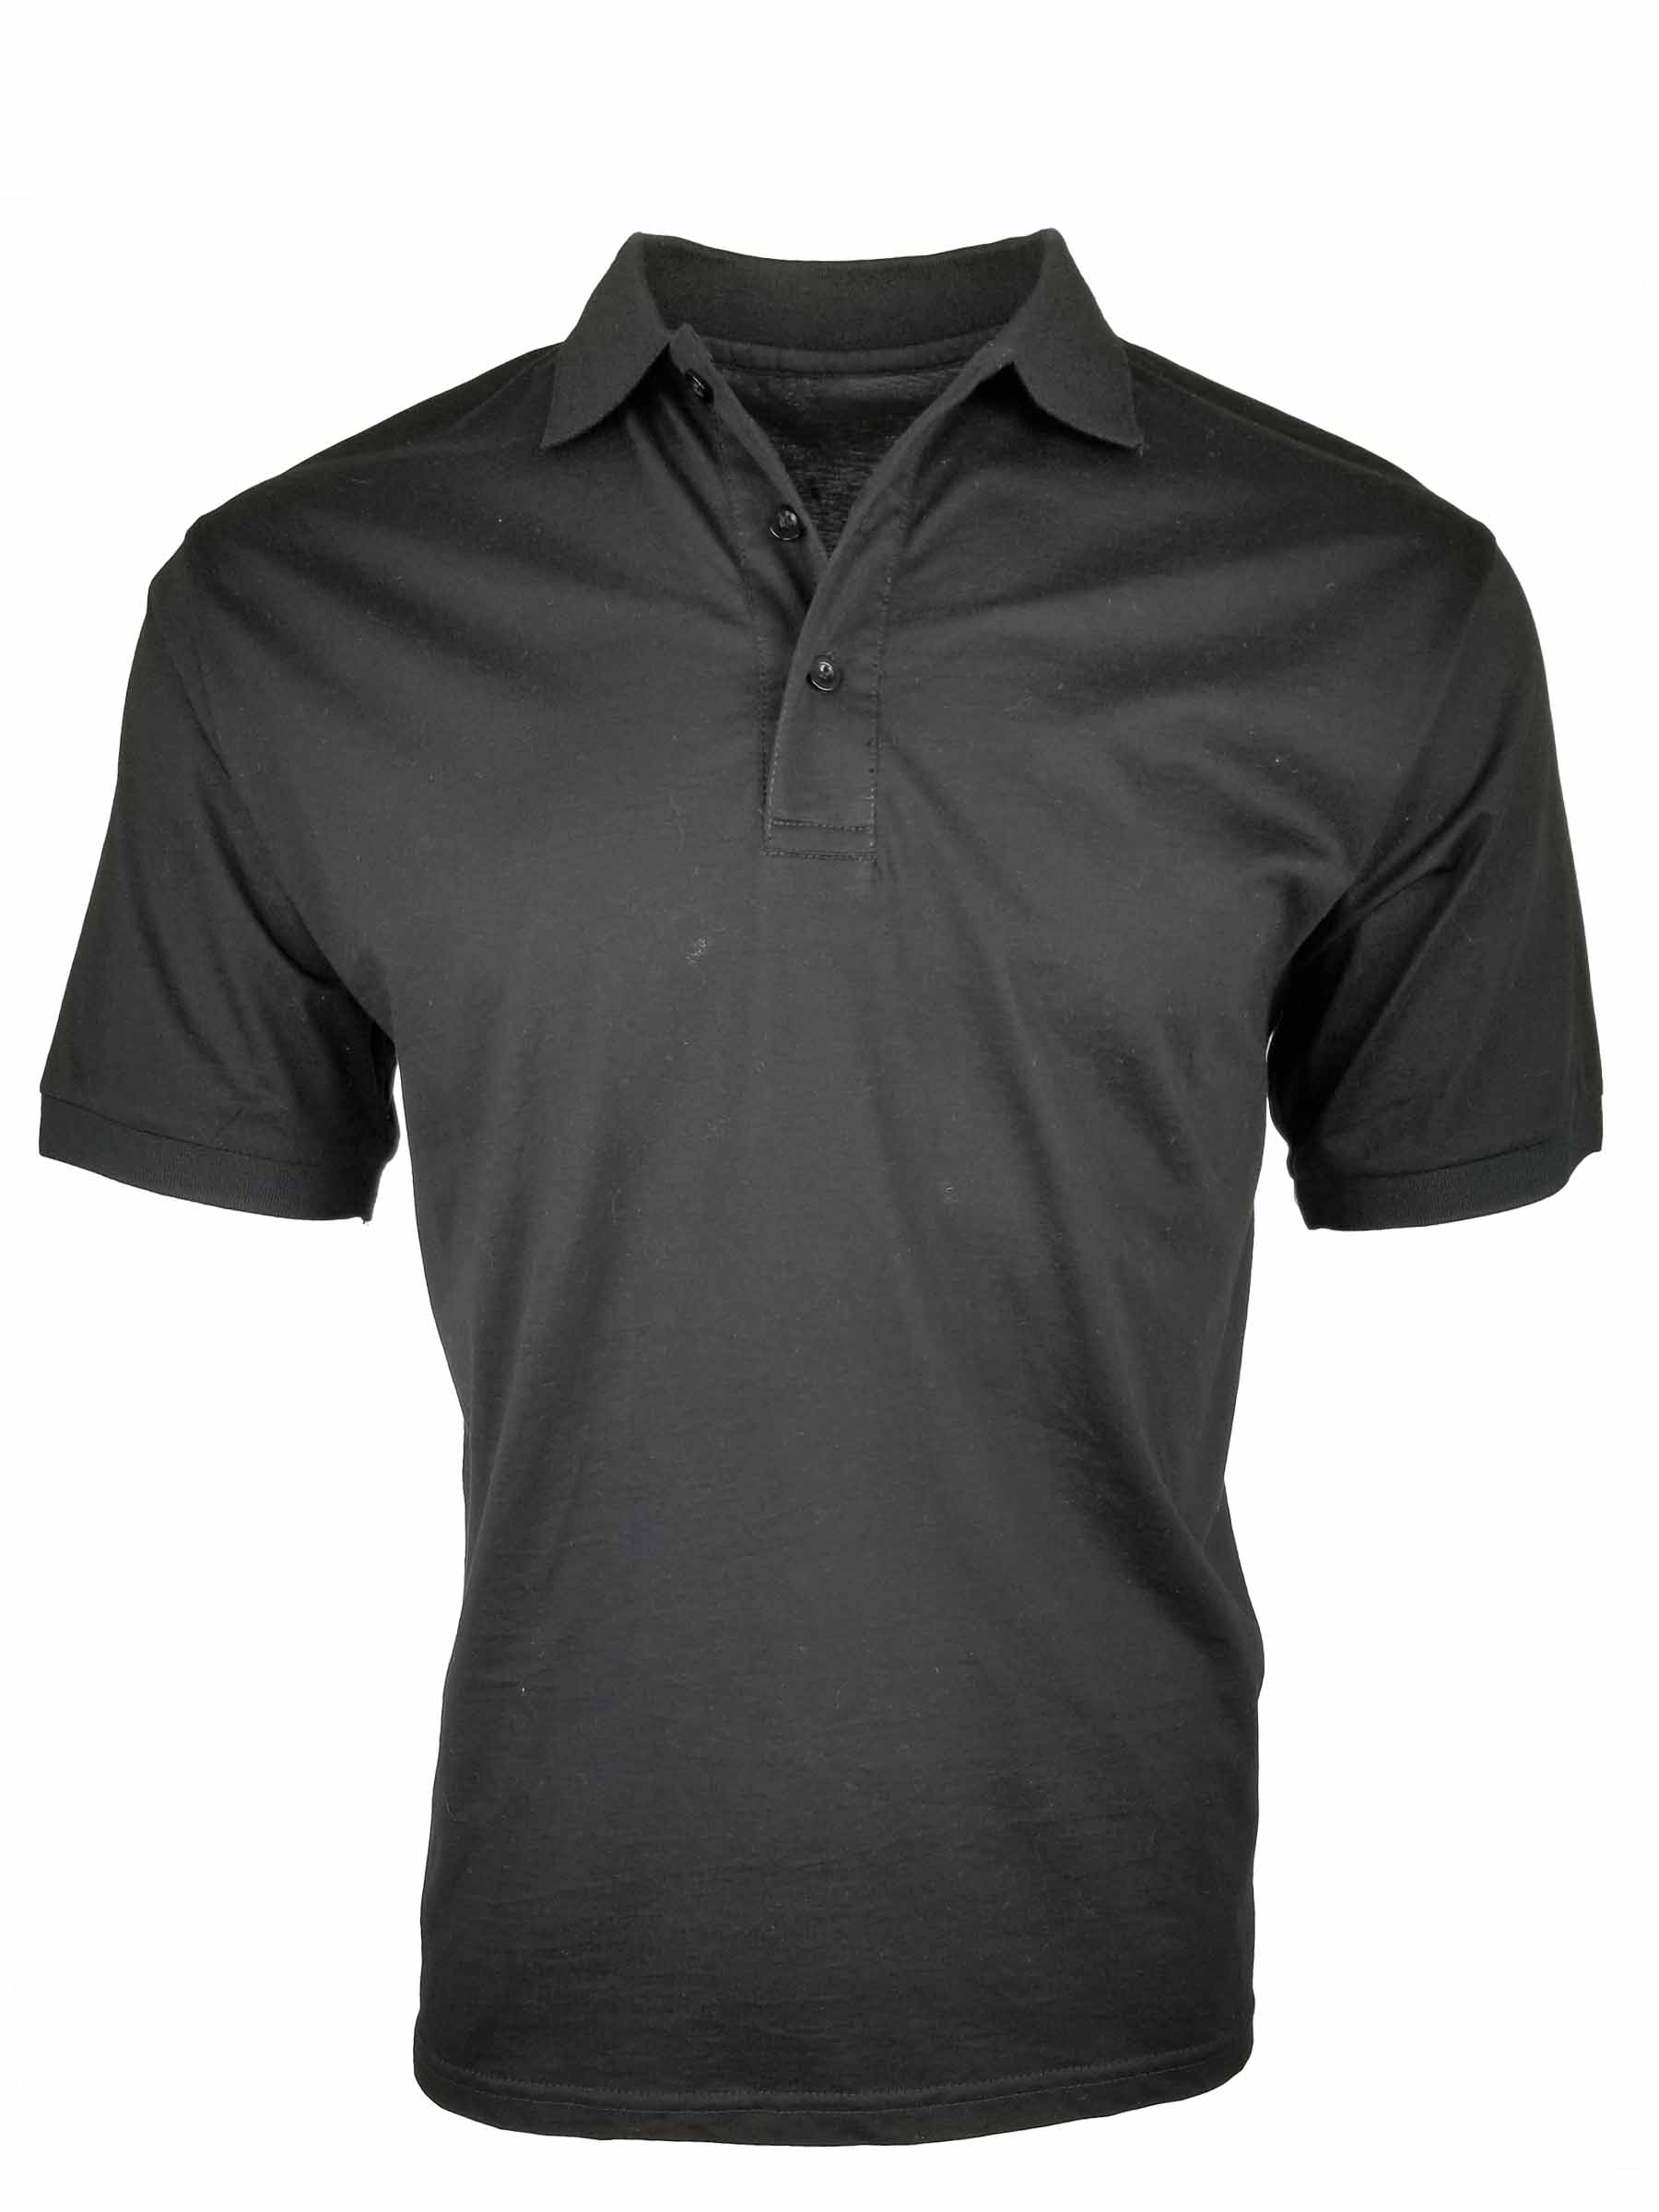 Men's All Occasion Mercerized Polo - Black - Uniform Edit